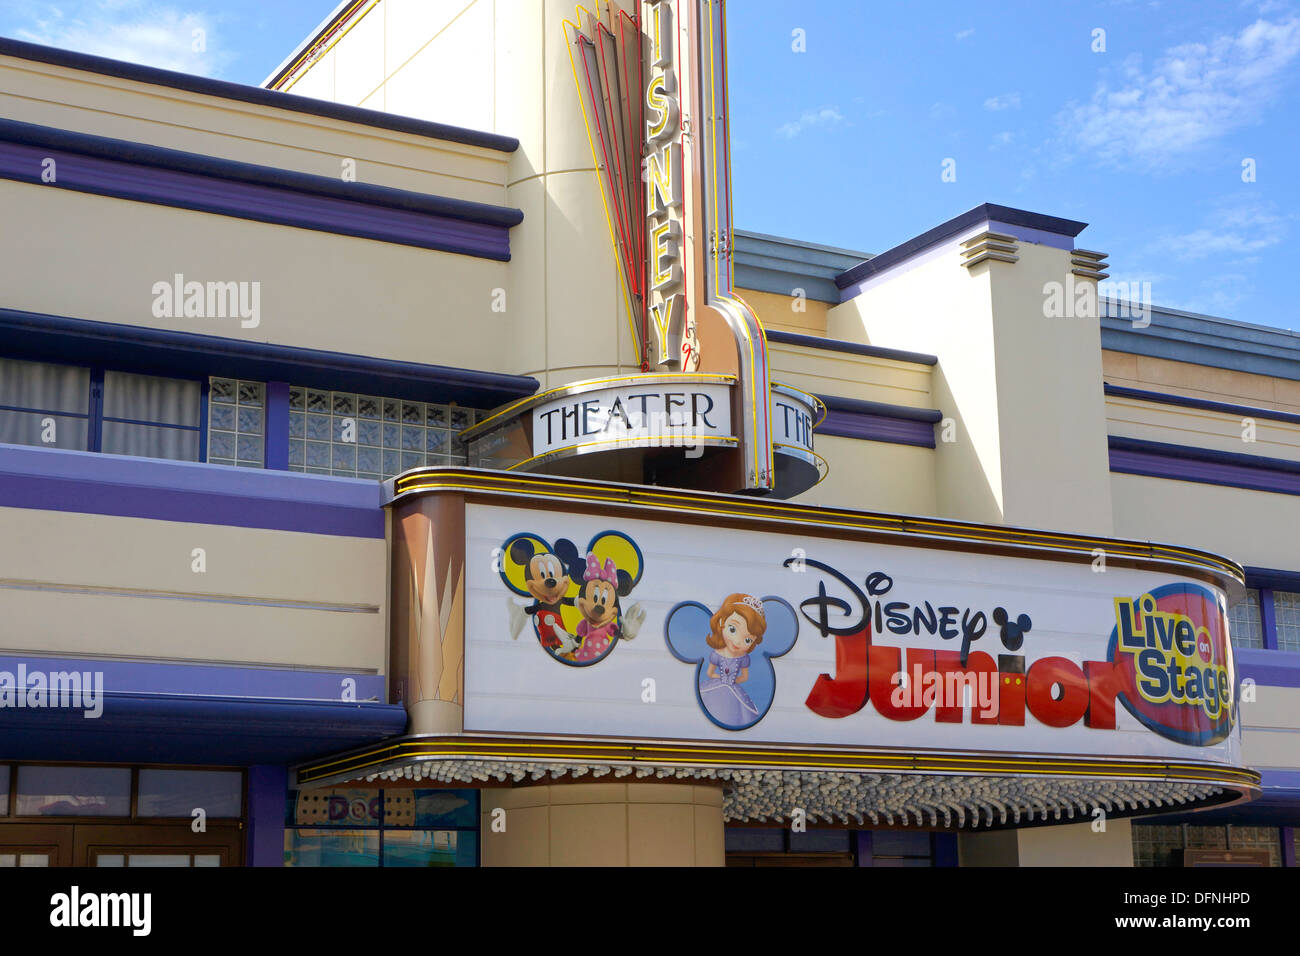 Disney Junior Live on Stage Theatre, Sign, Disneyland, Anaheim California Stock Photo